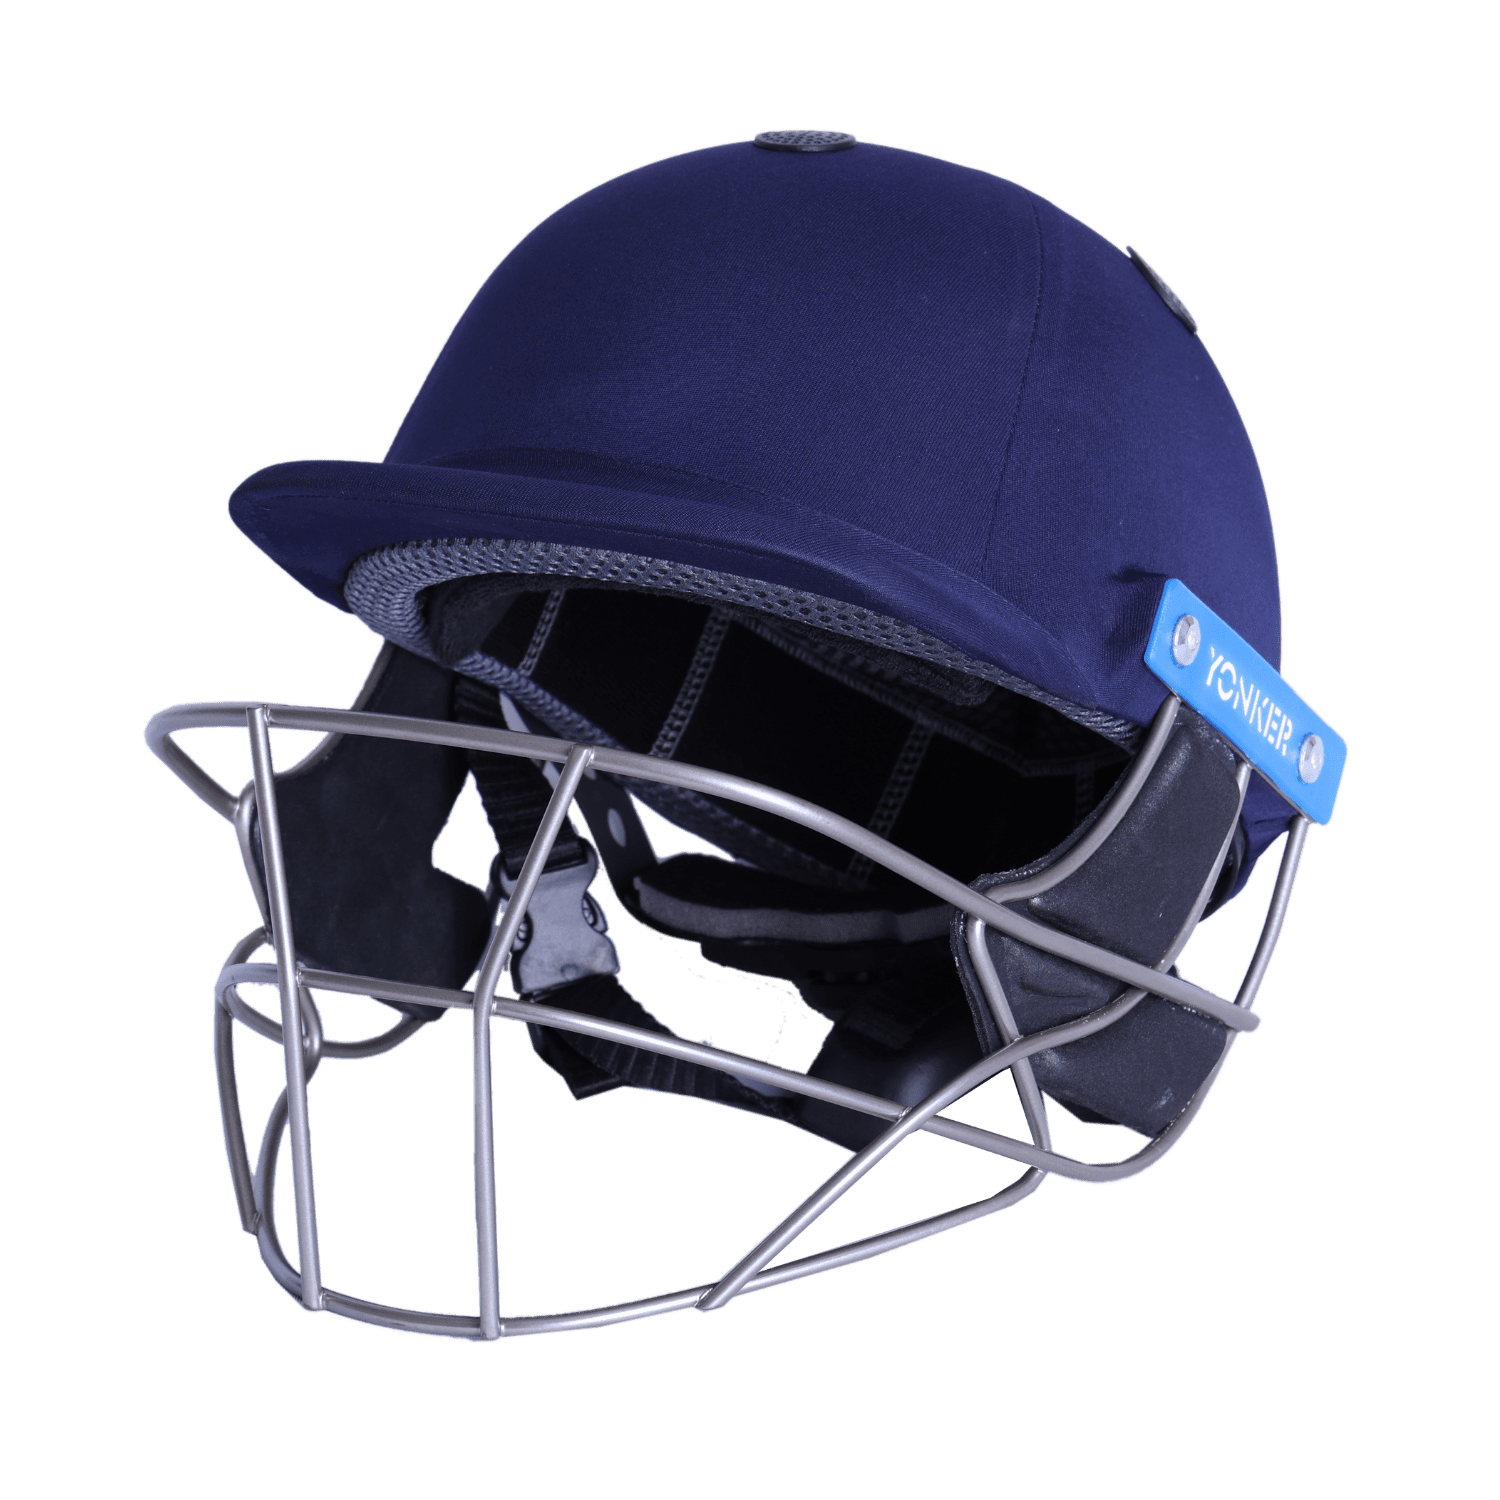 Cricket Helmet Test Club with TI Grill